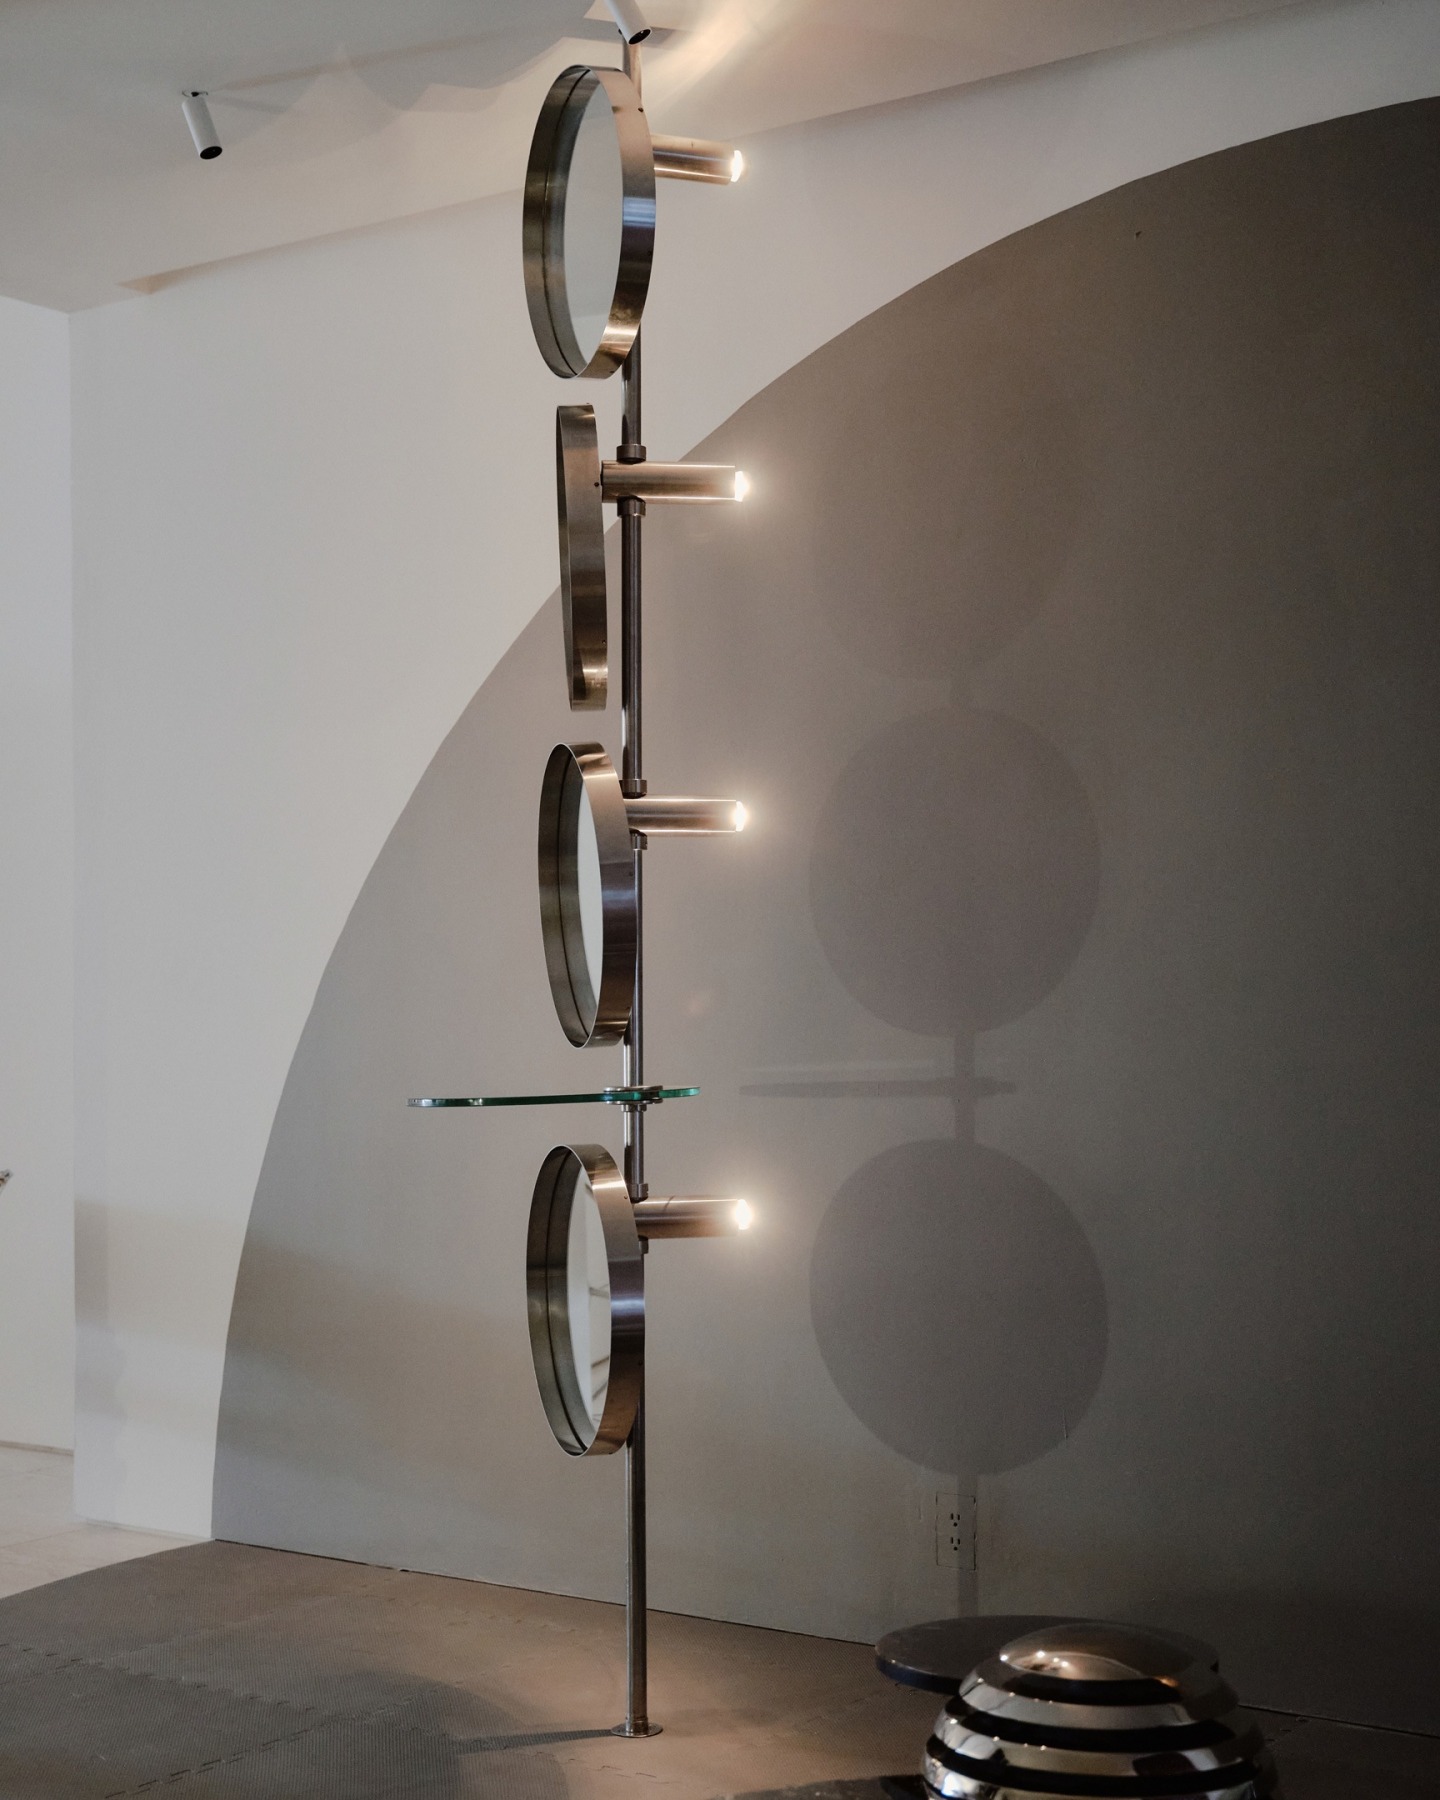 Circular mirror lamp in install